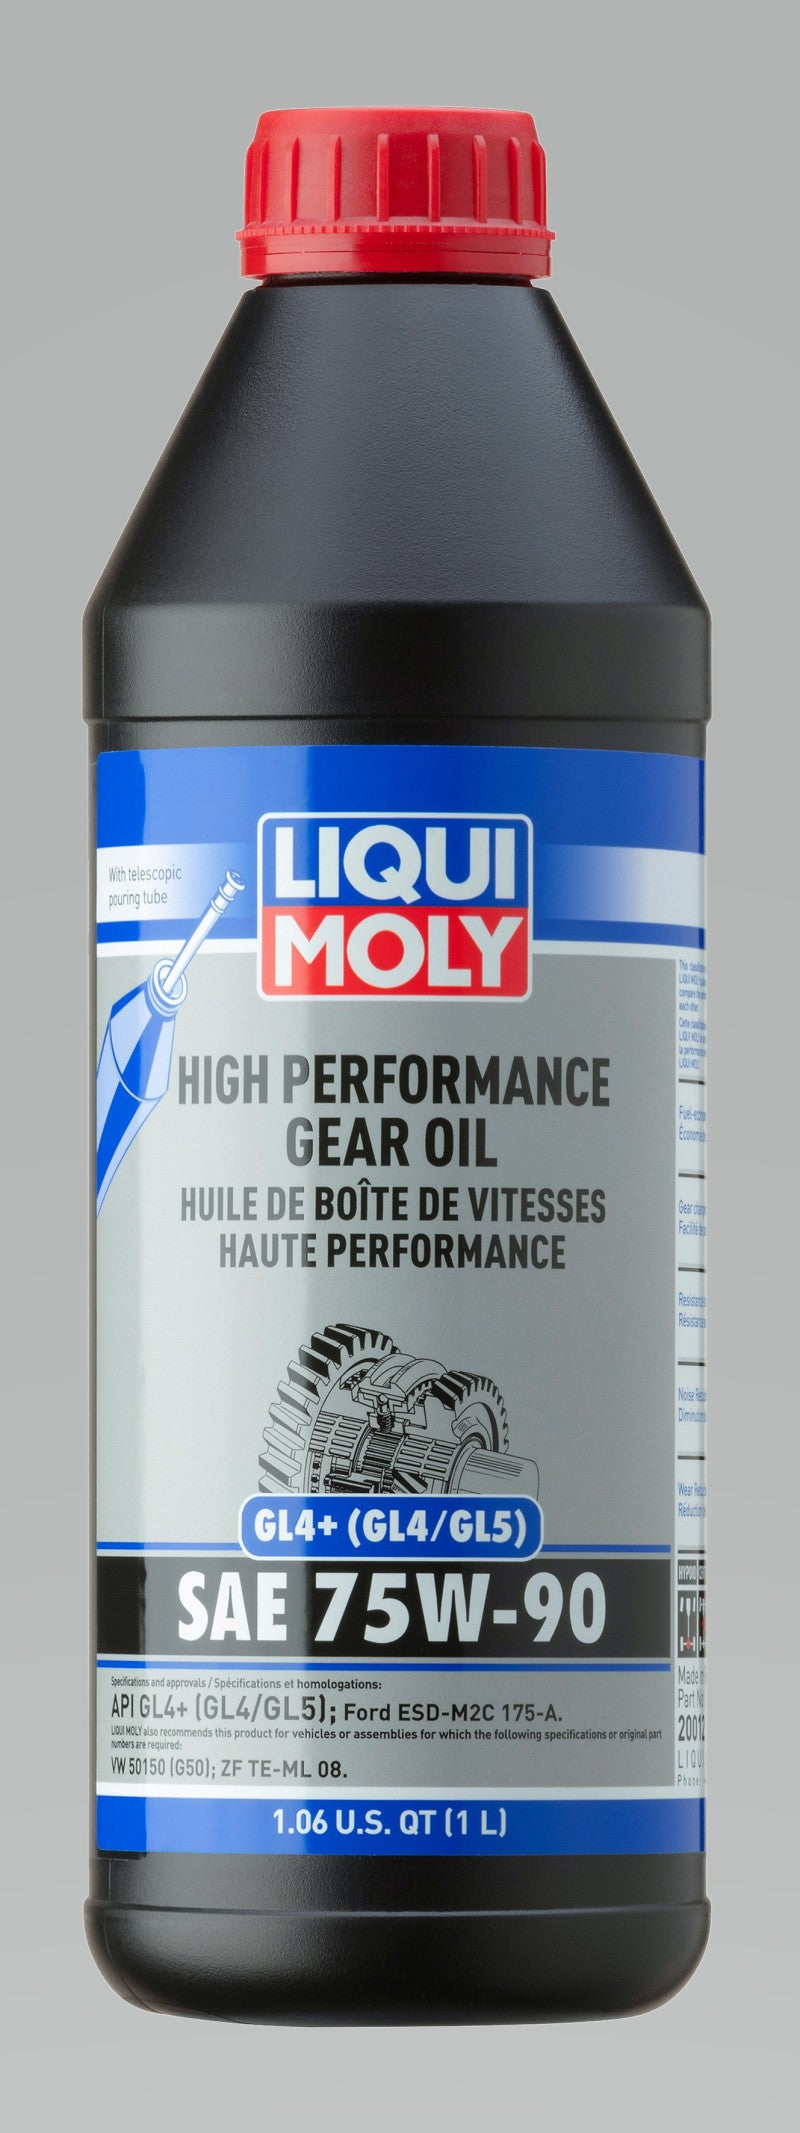 LIQUI MOLY 1L High Performance Gear Oil (GL4+) SAE 75W90 - Case of 6